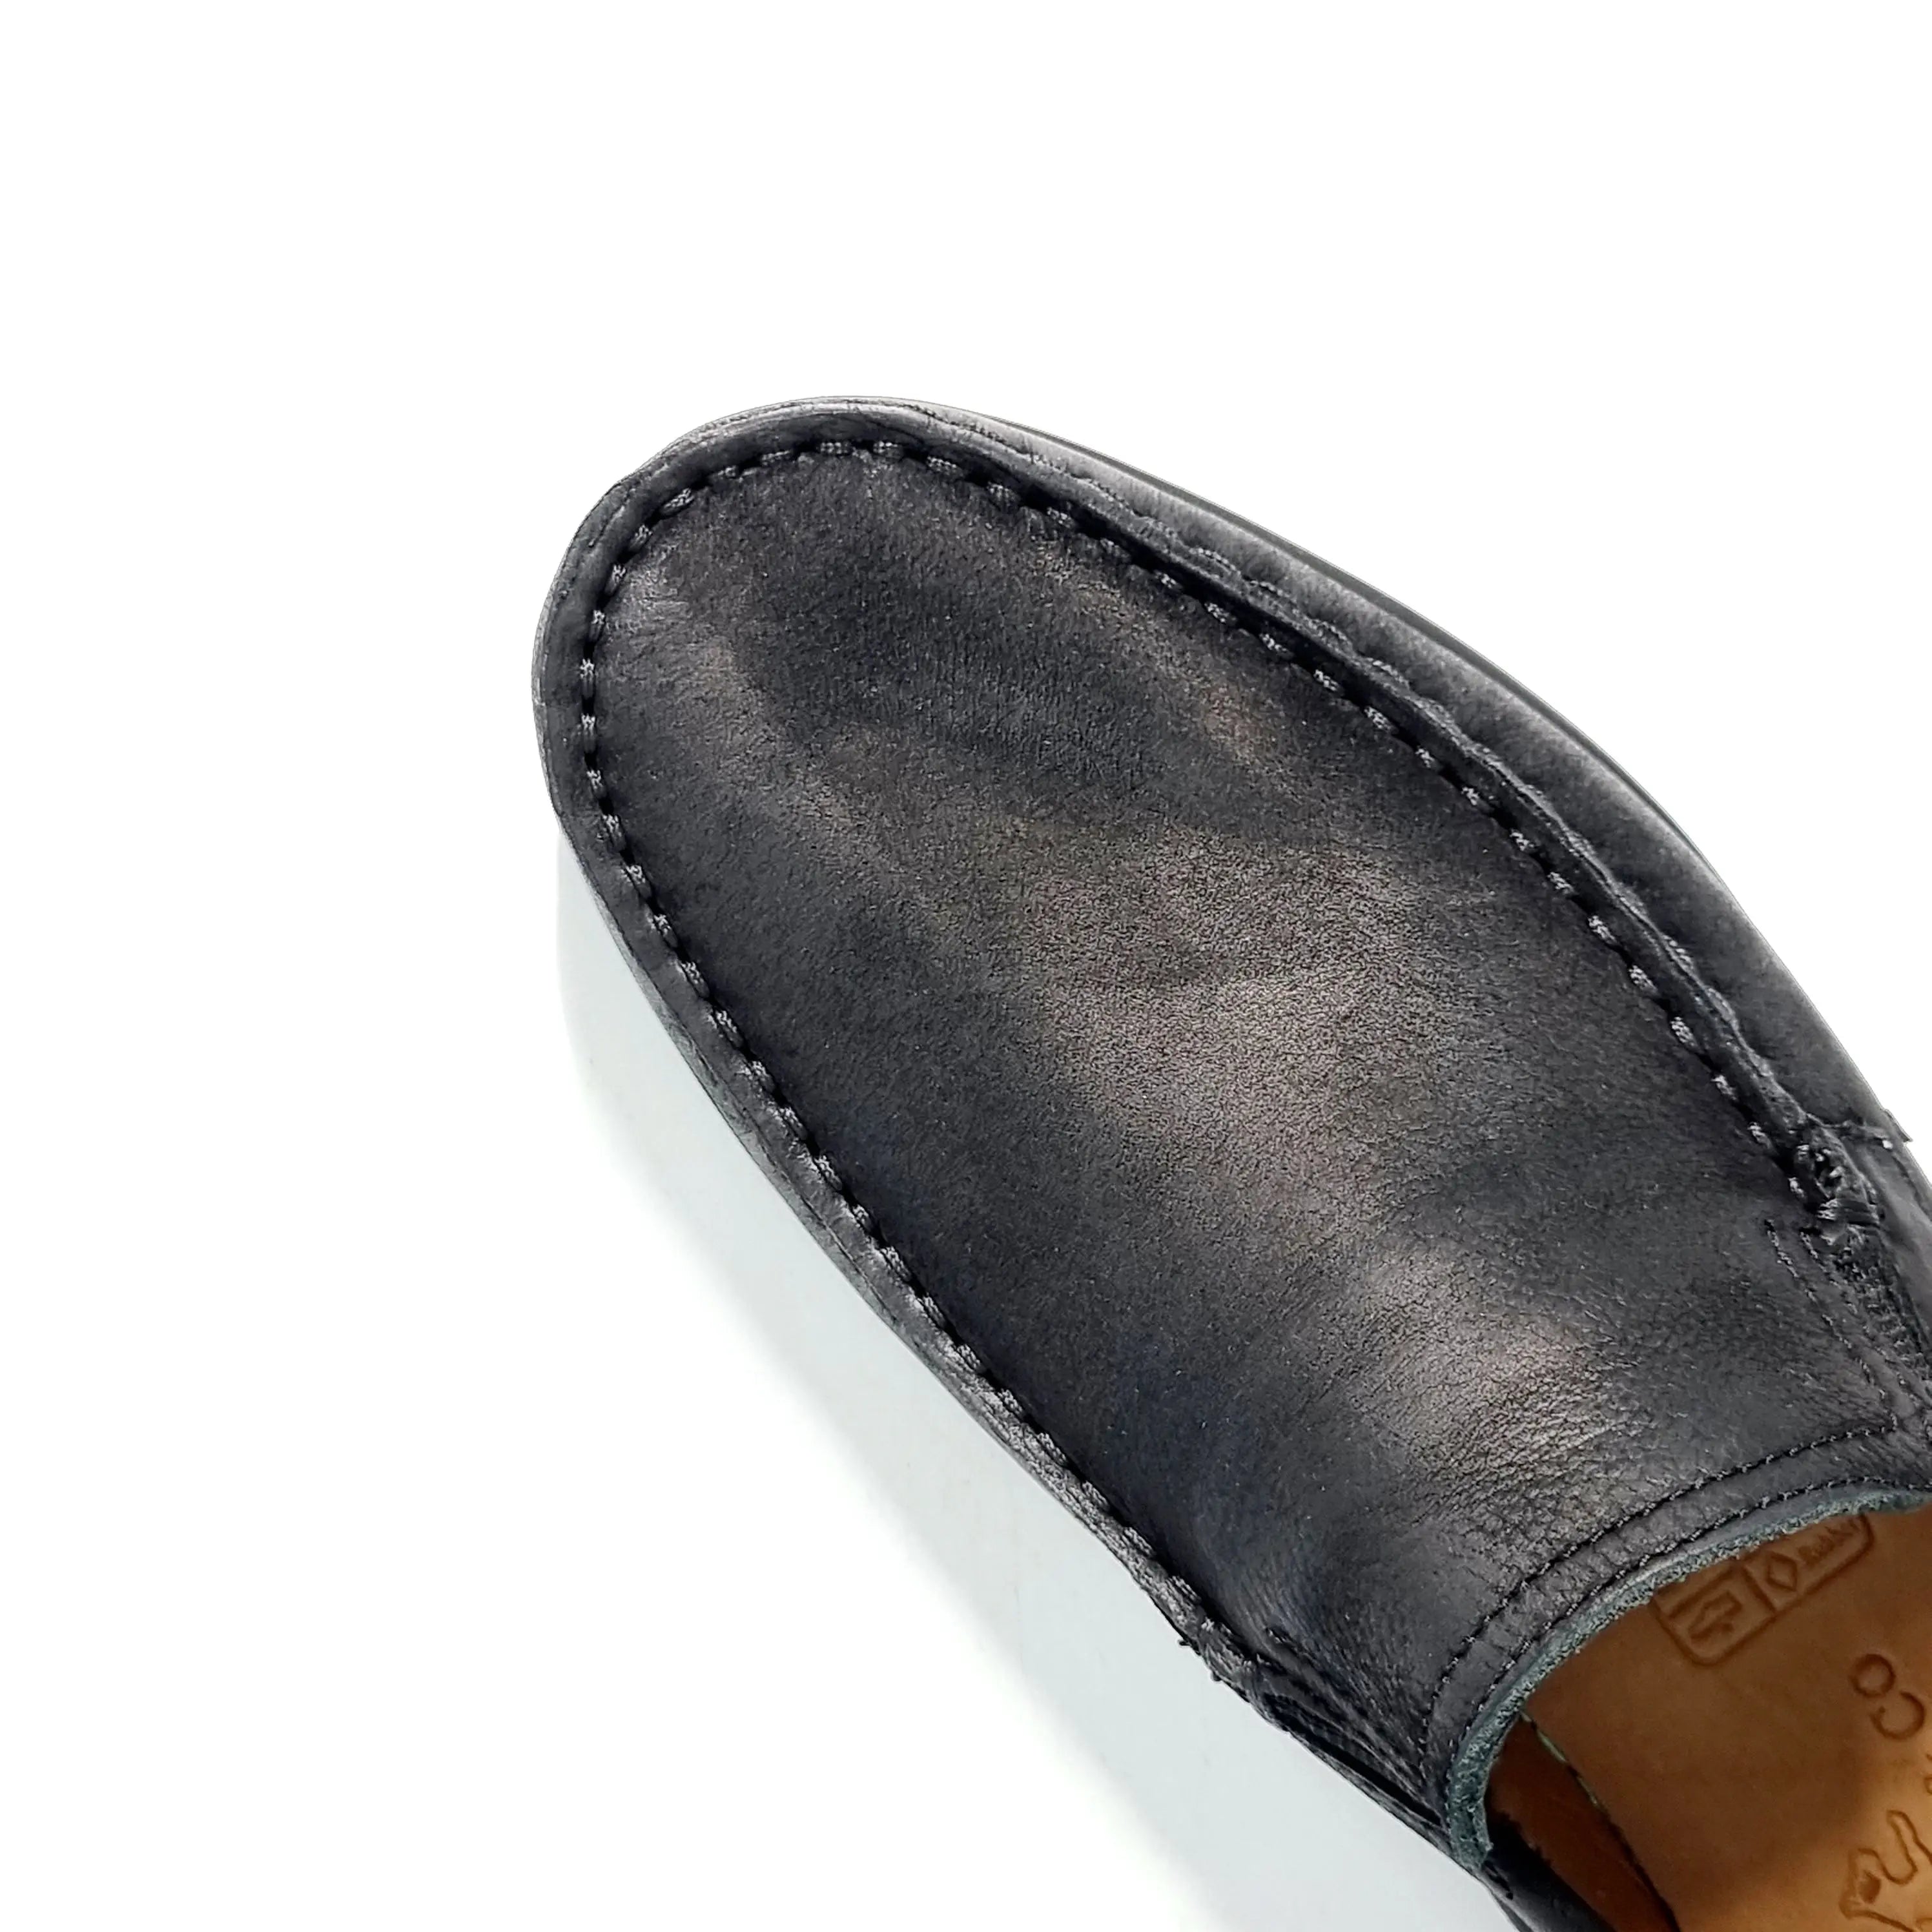 ANATOMIC 353501 VINTAGE BLACK Loafers | familyshoecentre